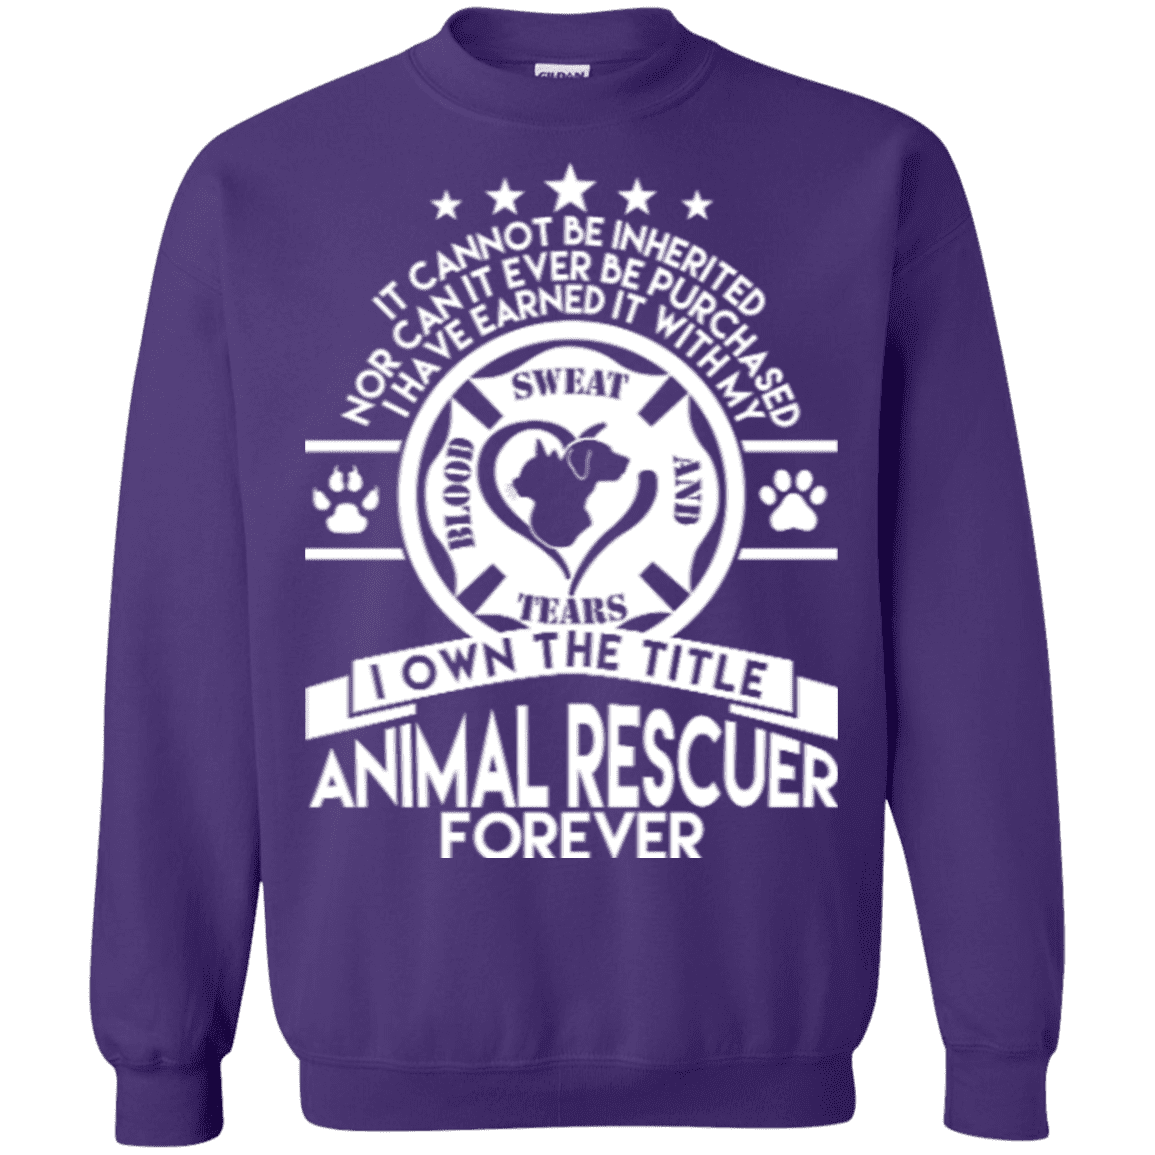 Animal Rescuer Forever - Sweatshirt.